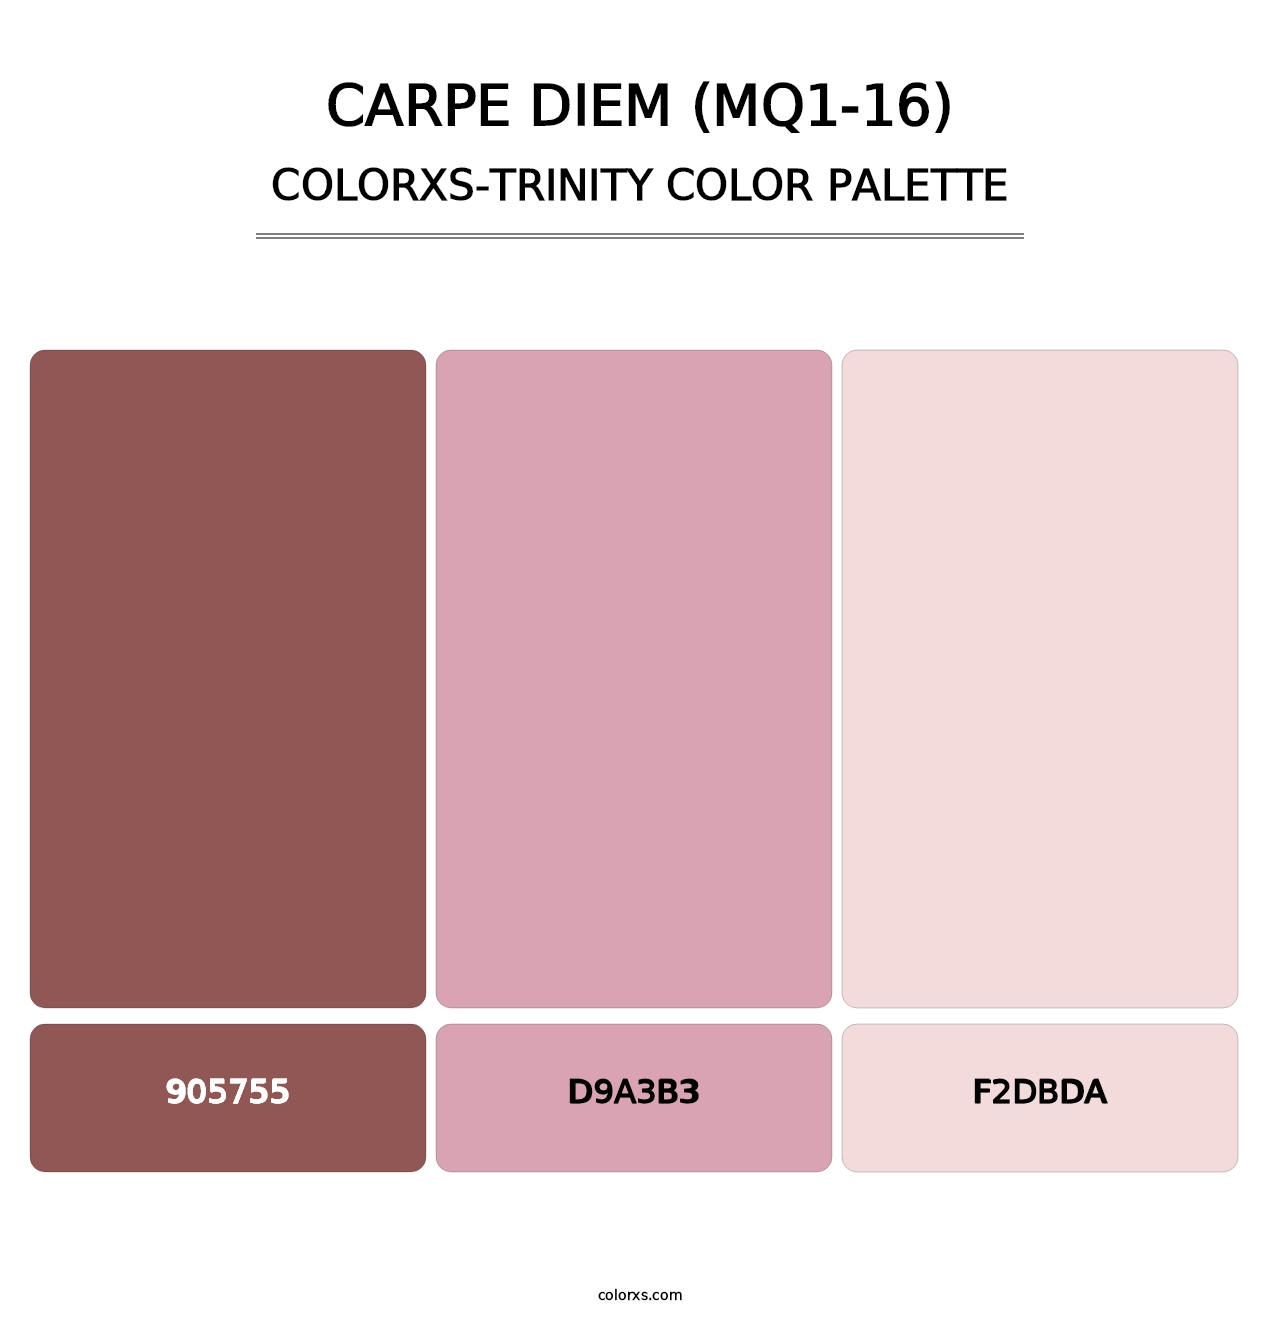 Carpe Diem (MQ1-16) - Colorxs Trinity Palette